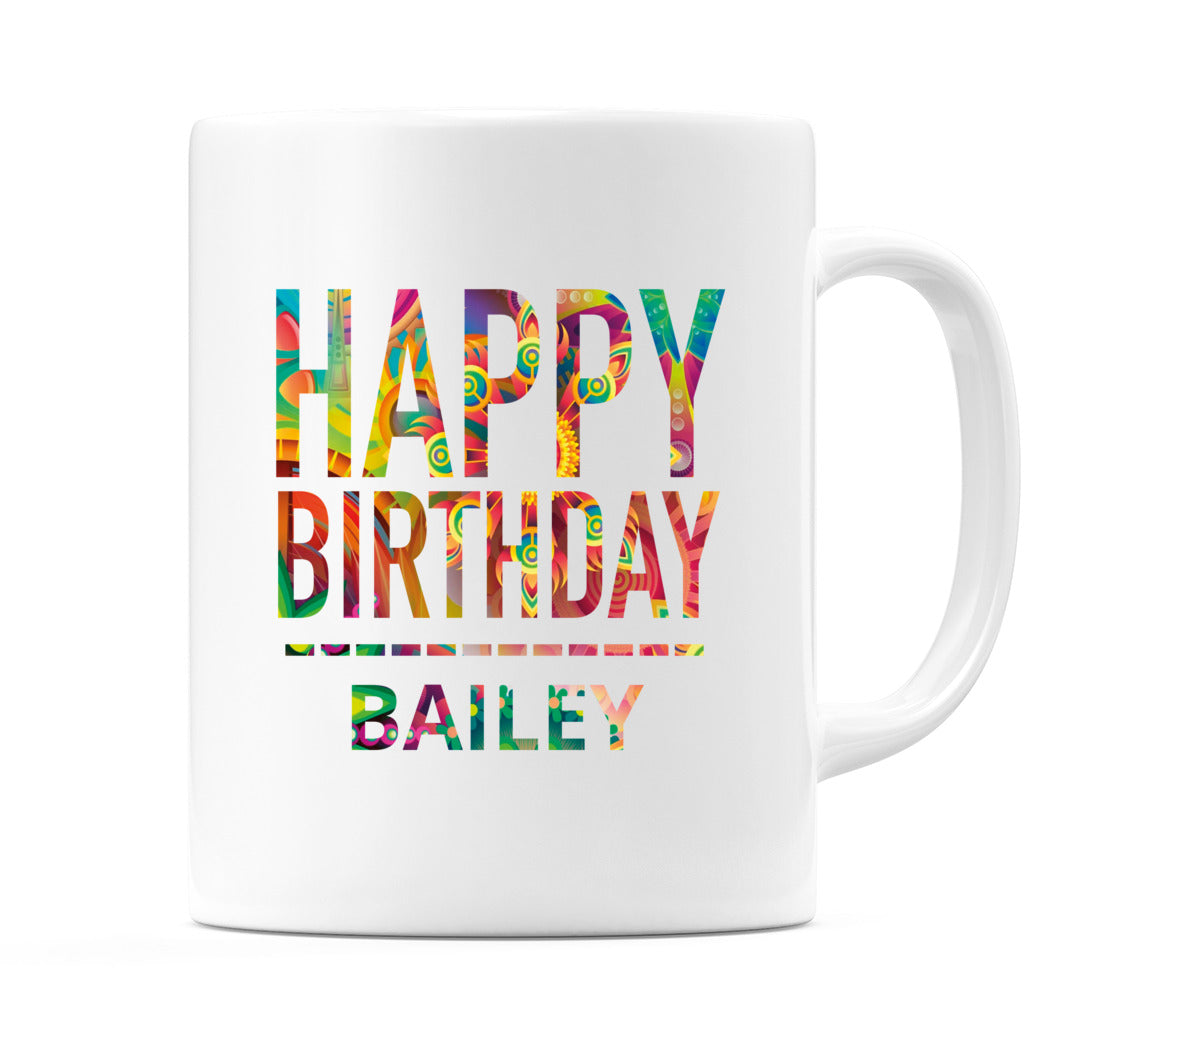 Happy Birthday Bailey (Tie Dye Effect) Mug Cup by WeDoMugs